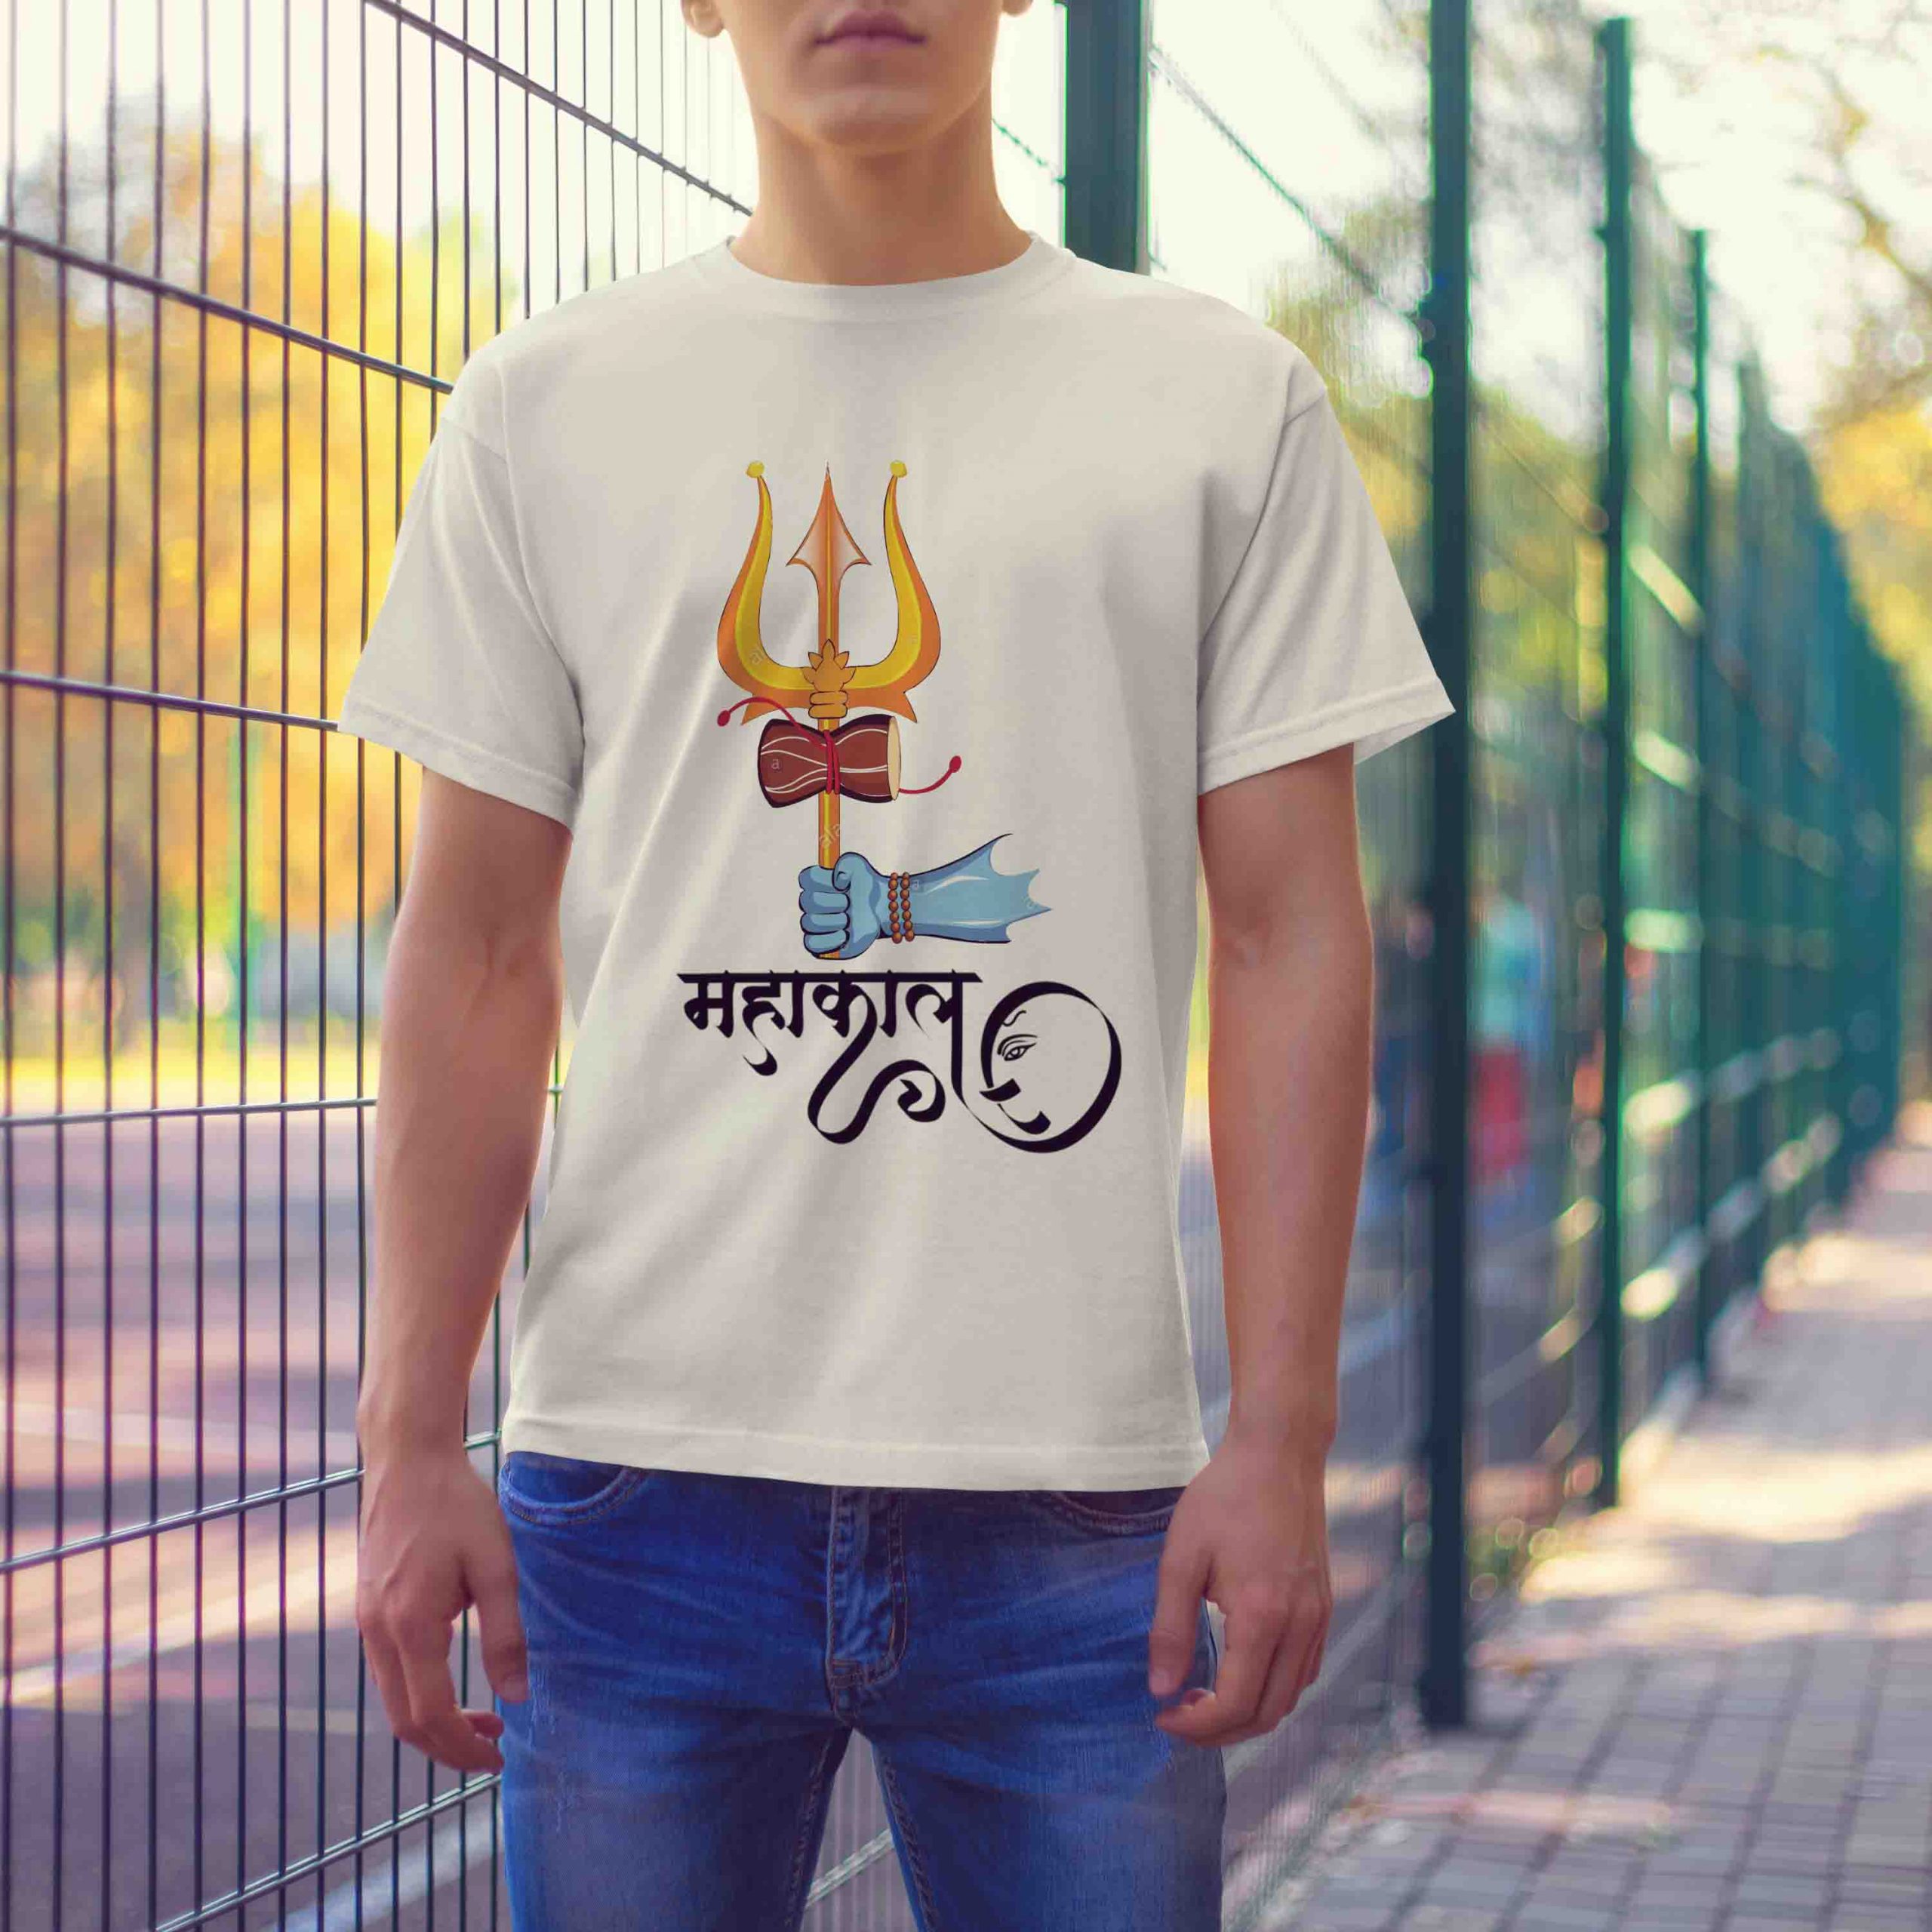 Beautiful art of Mahakal with Ganesh white t-shirt for men